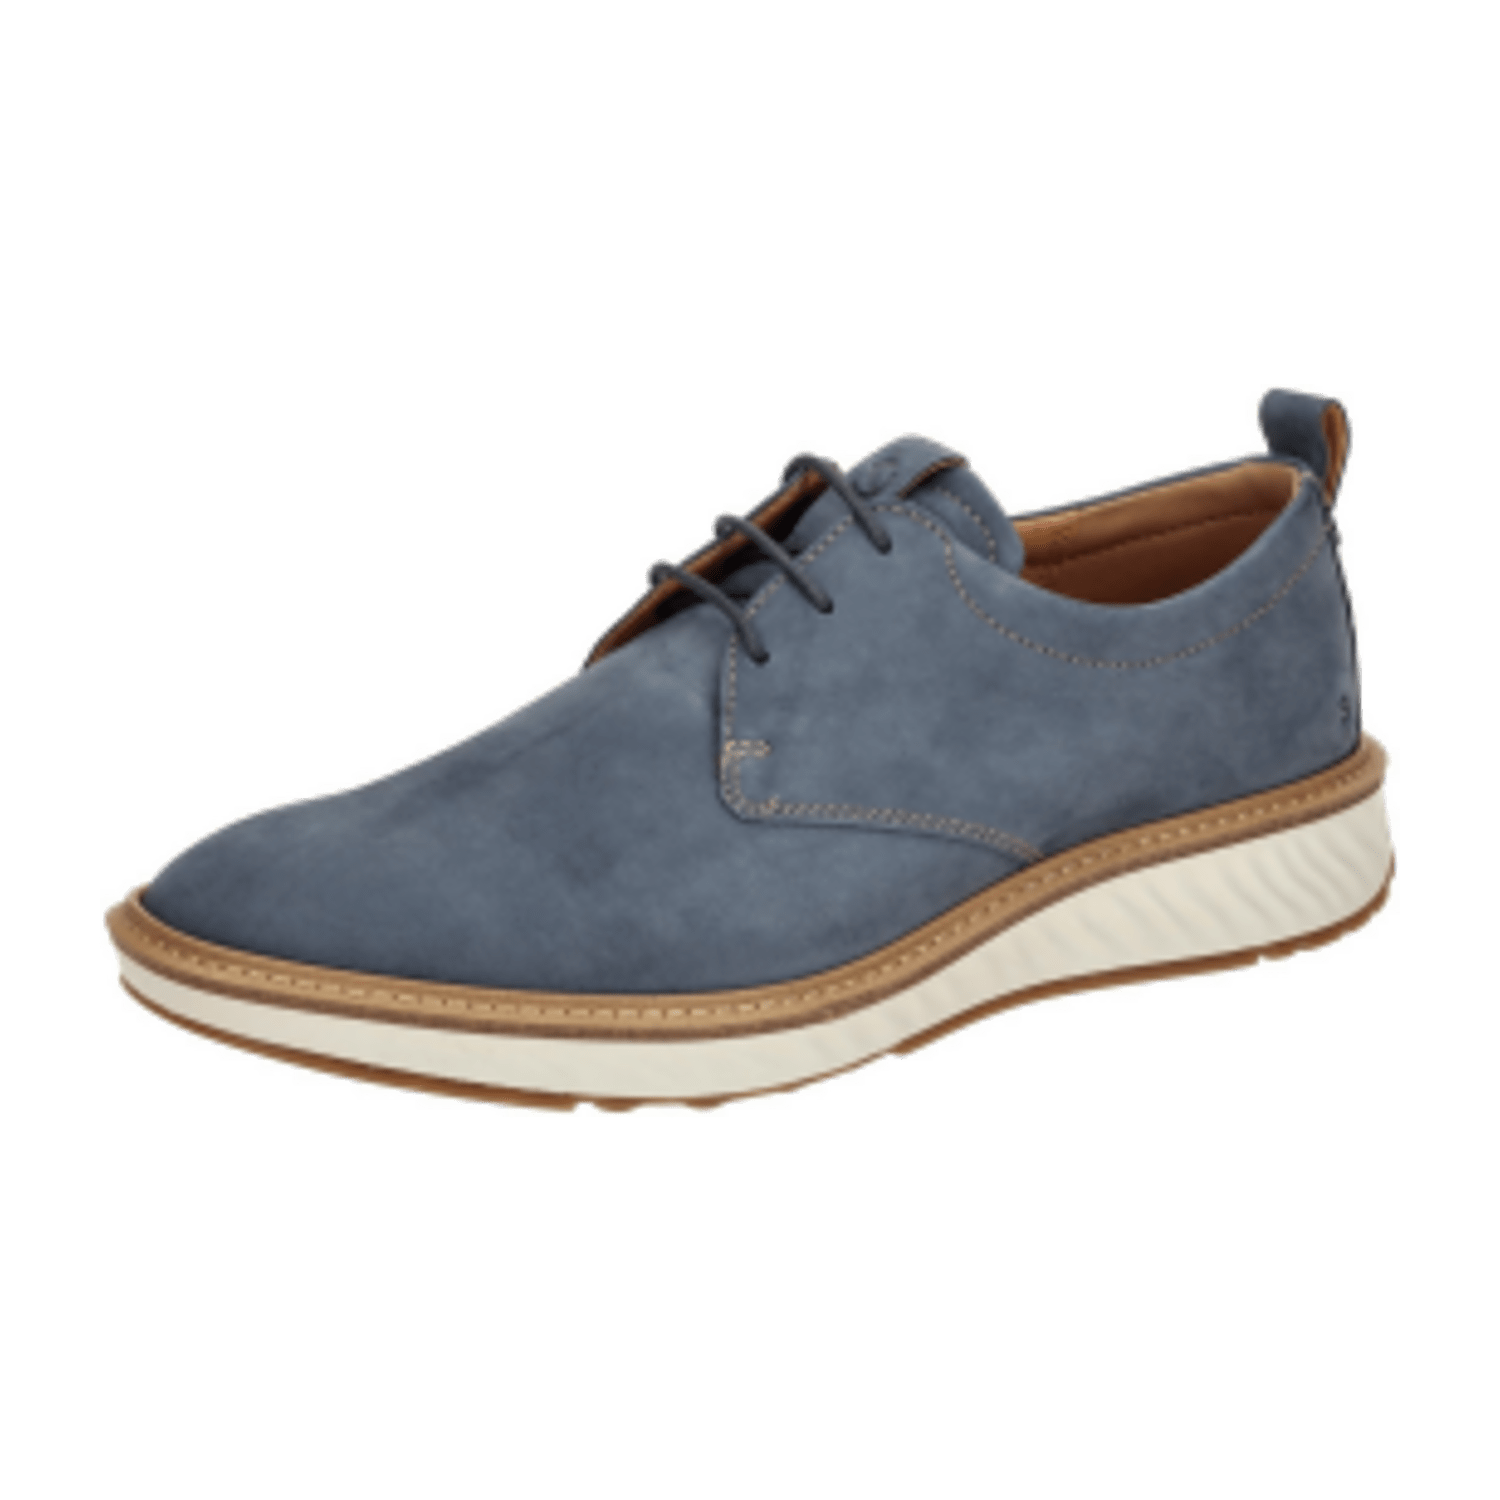 Ecco ST1 Hybrid Schuhe blau ombre Nubuck 836914